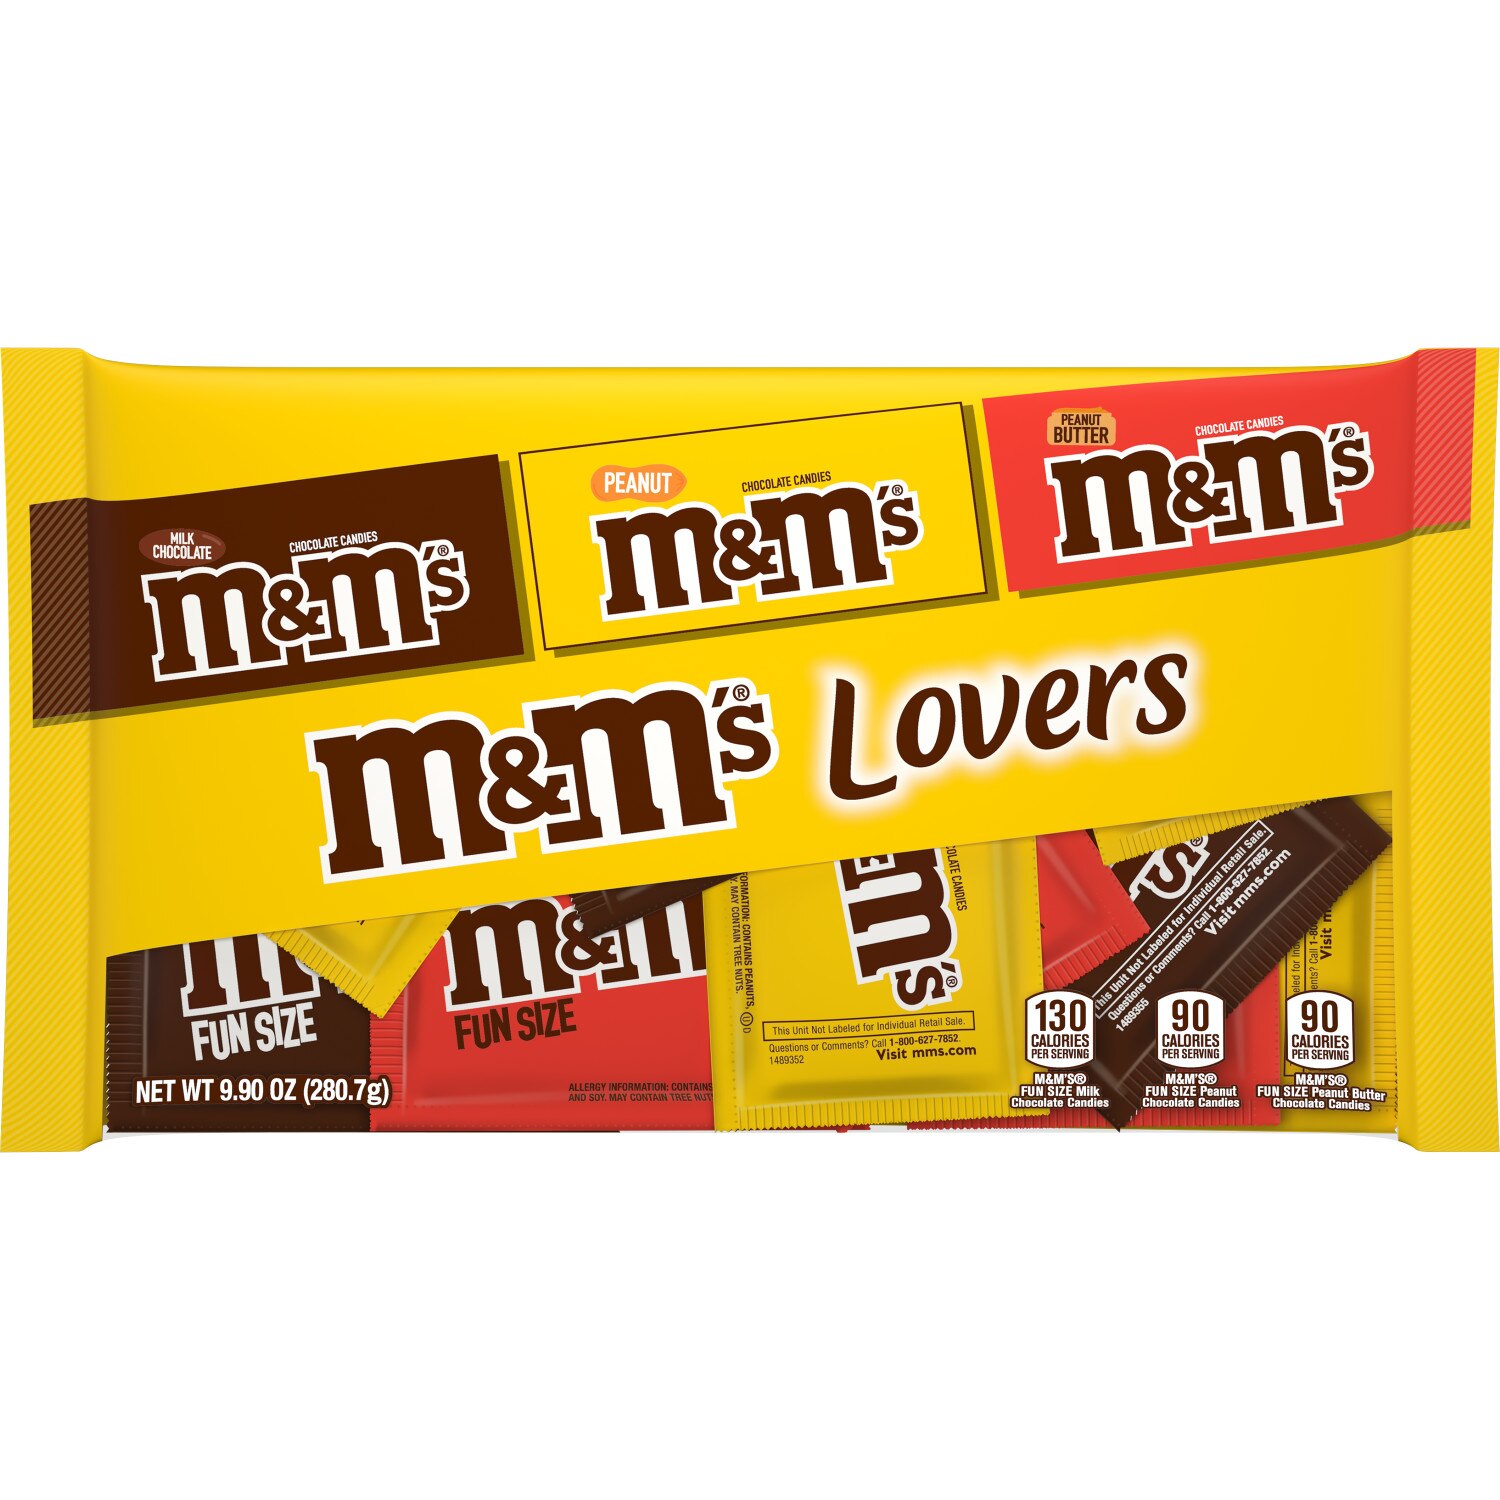 M&M'S Milk Chocolate, Peanut, and Peanut Butter Fun Size Halloween